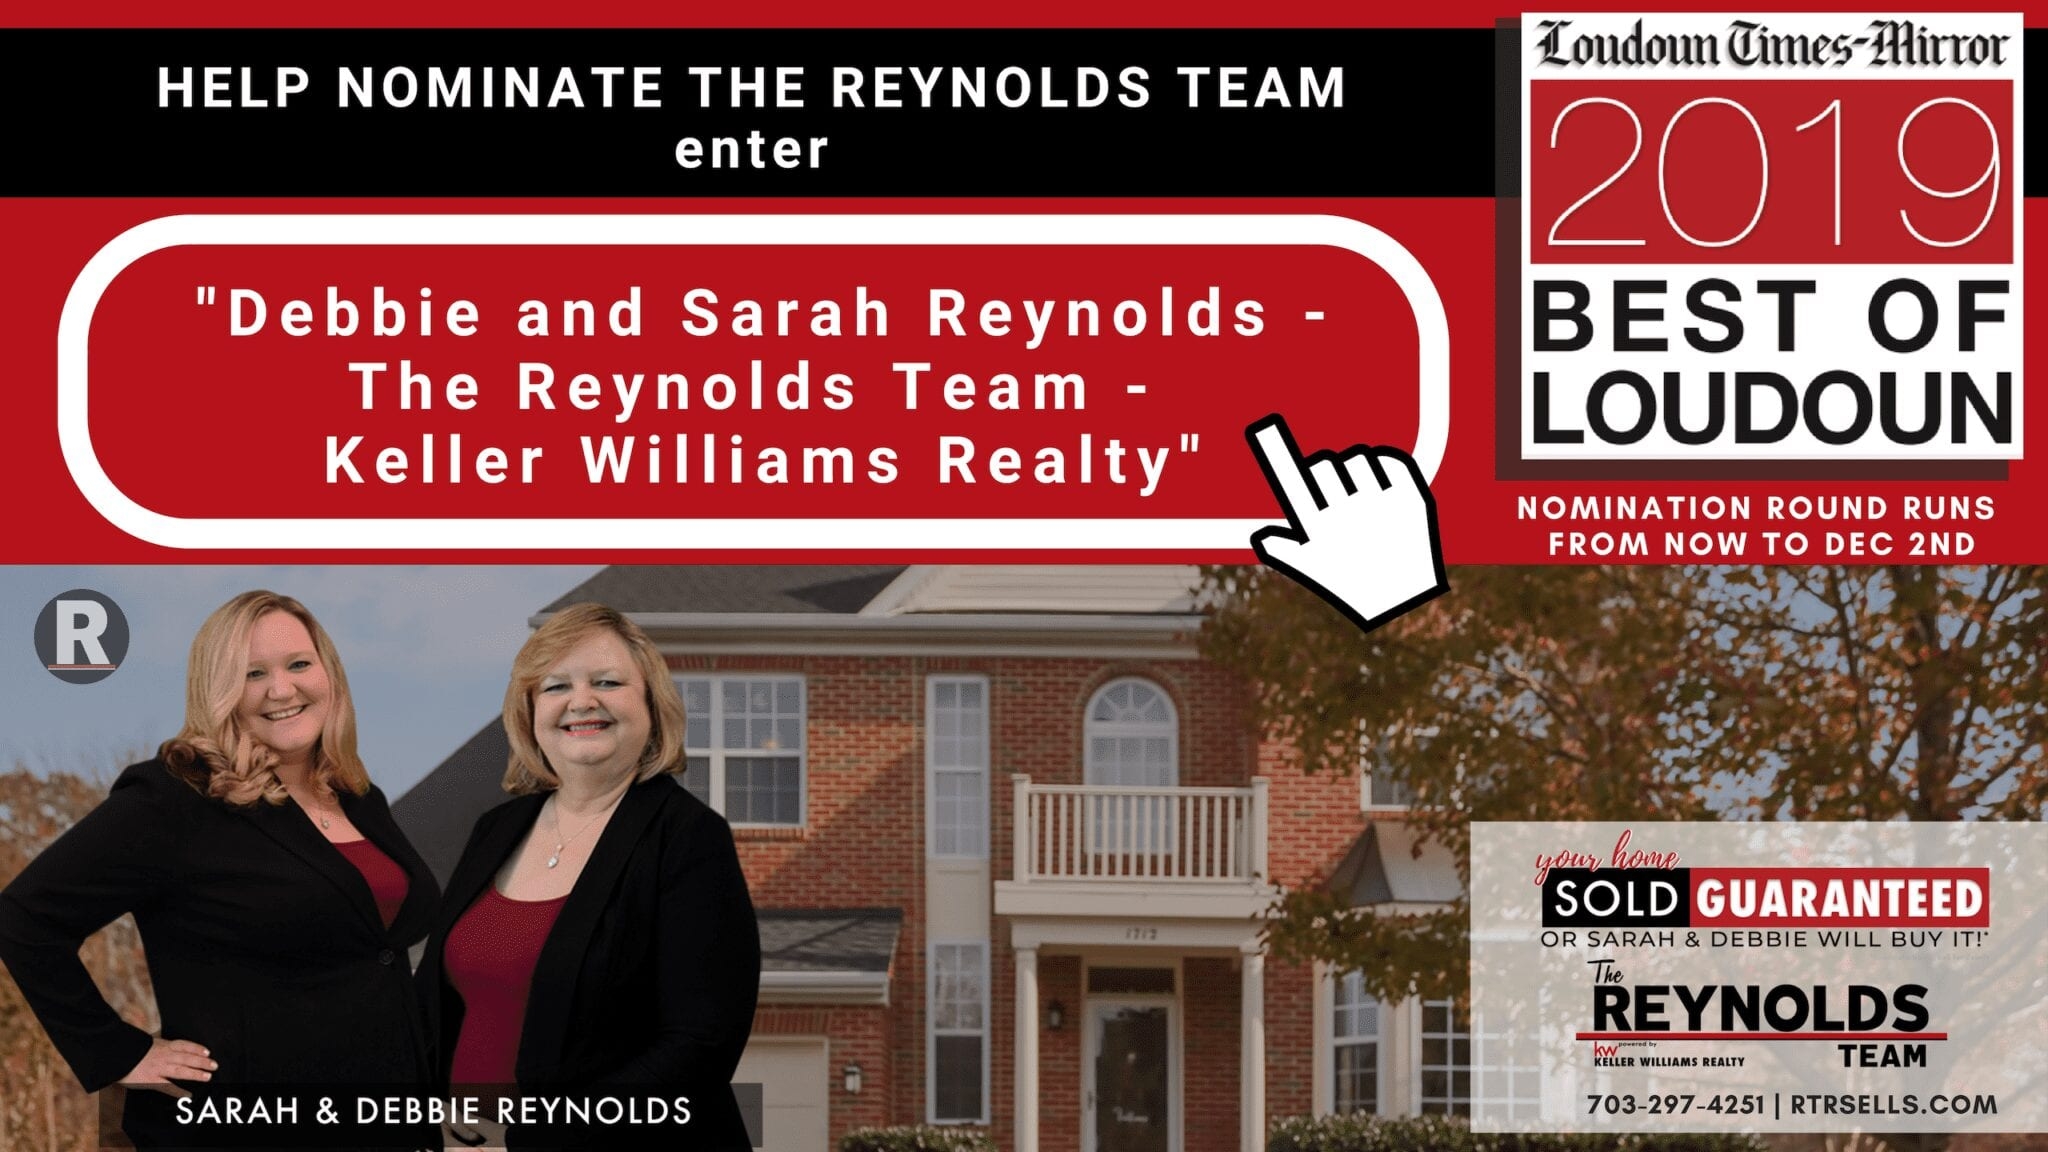 Help NOMINATE The Reynolds Team as Favorite Realtor Team in Loudoun Times-Mirror 2019 Best of Loudoun!